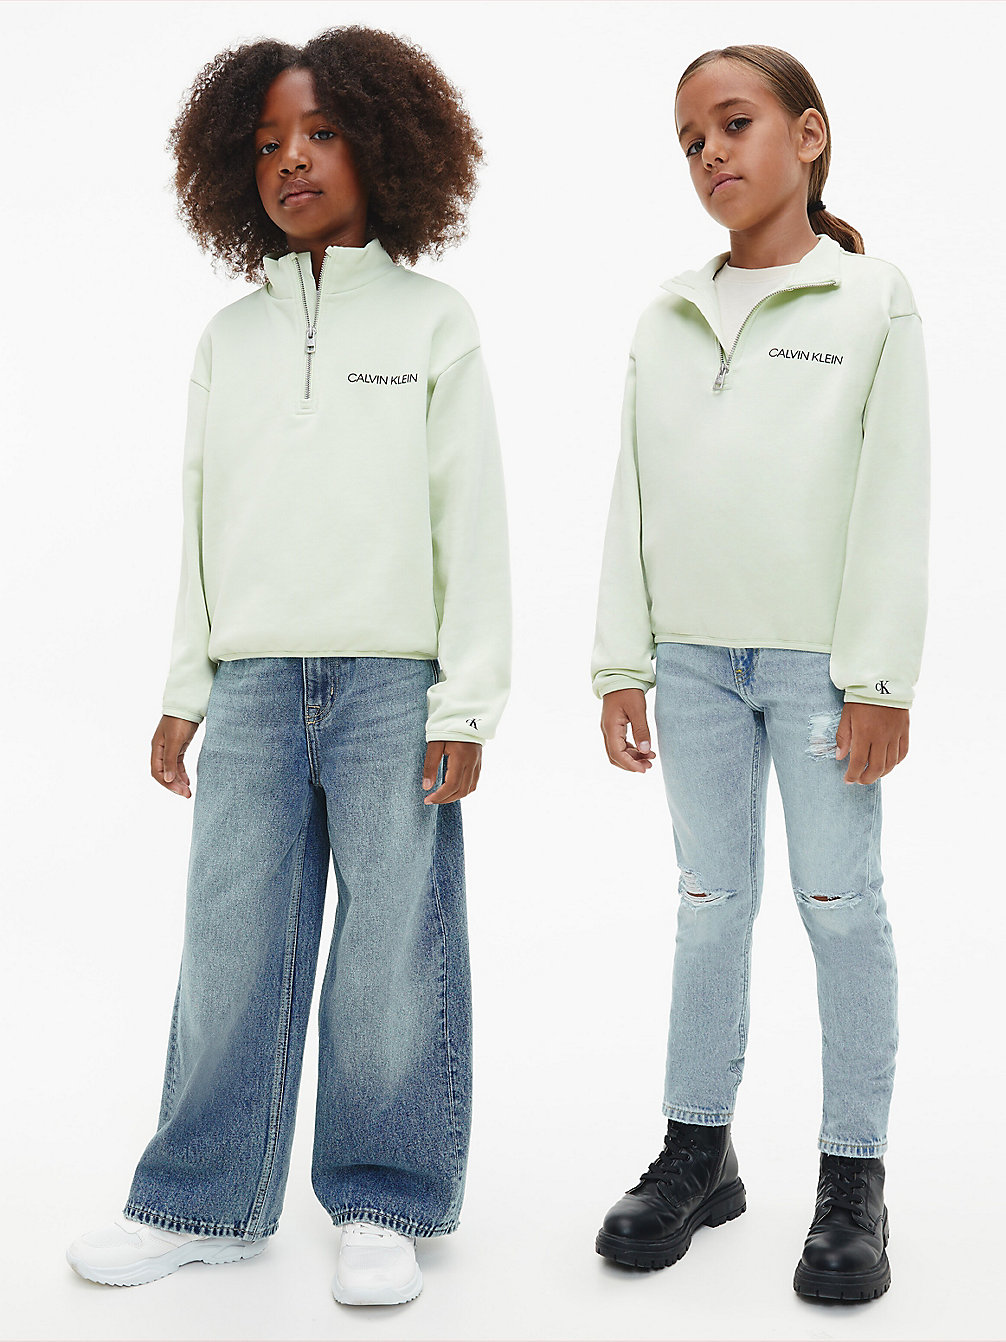 SEAFOAM GREEN > Relaxed Unisex Sweatshirt Met Rits In Hals > undefined kids unisex - Calvin Klein